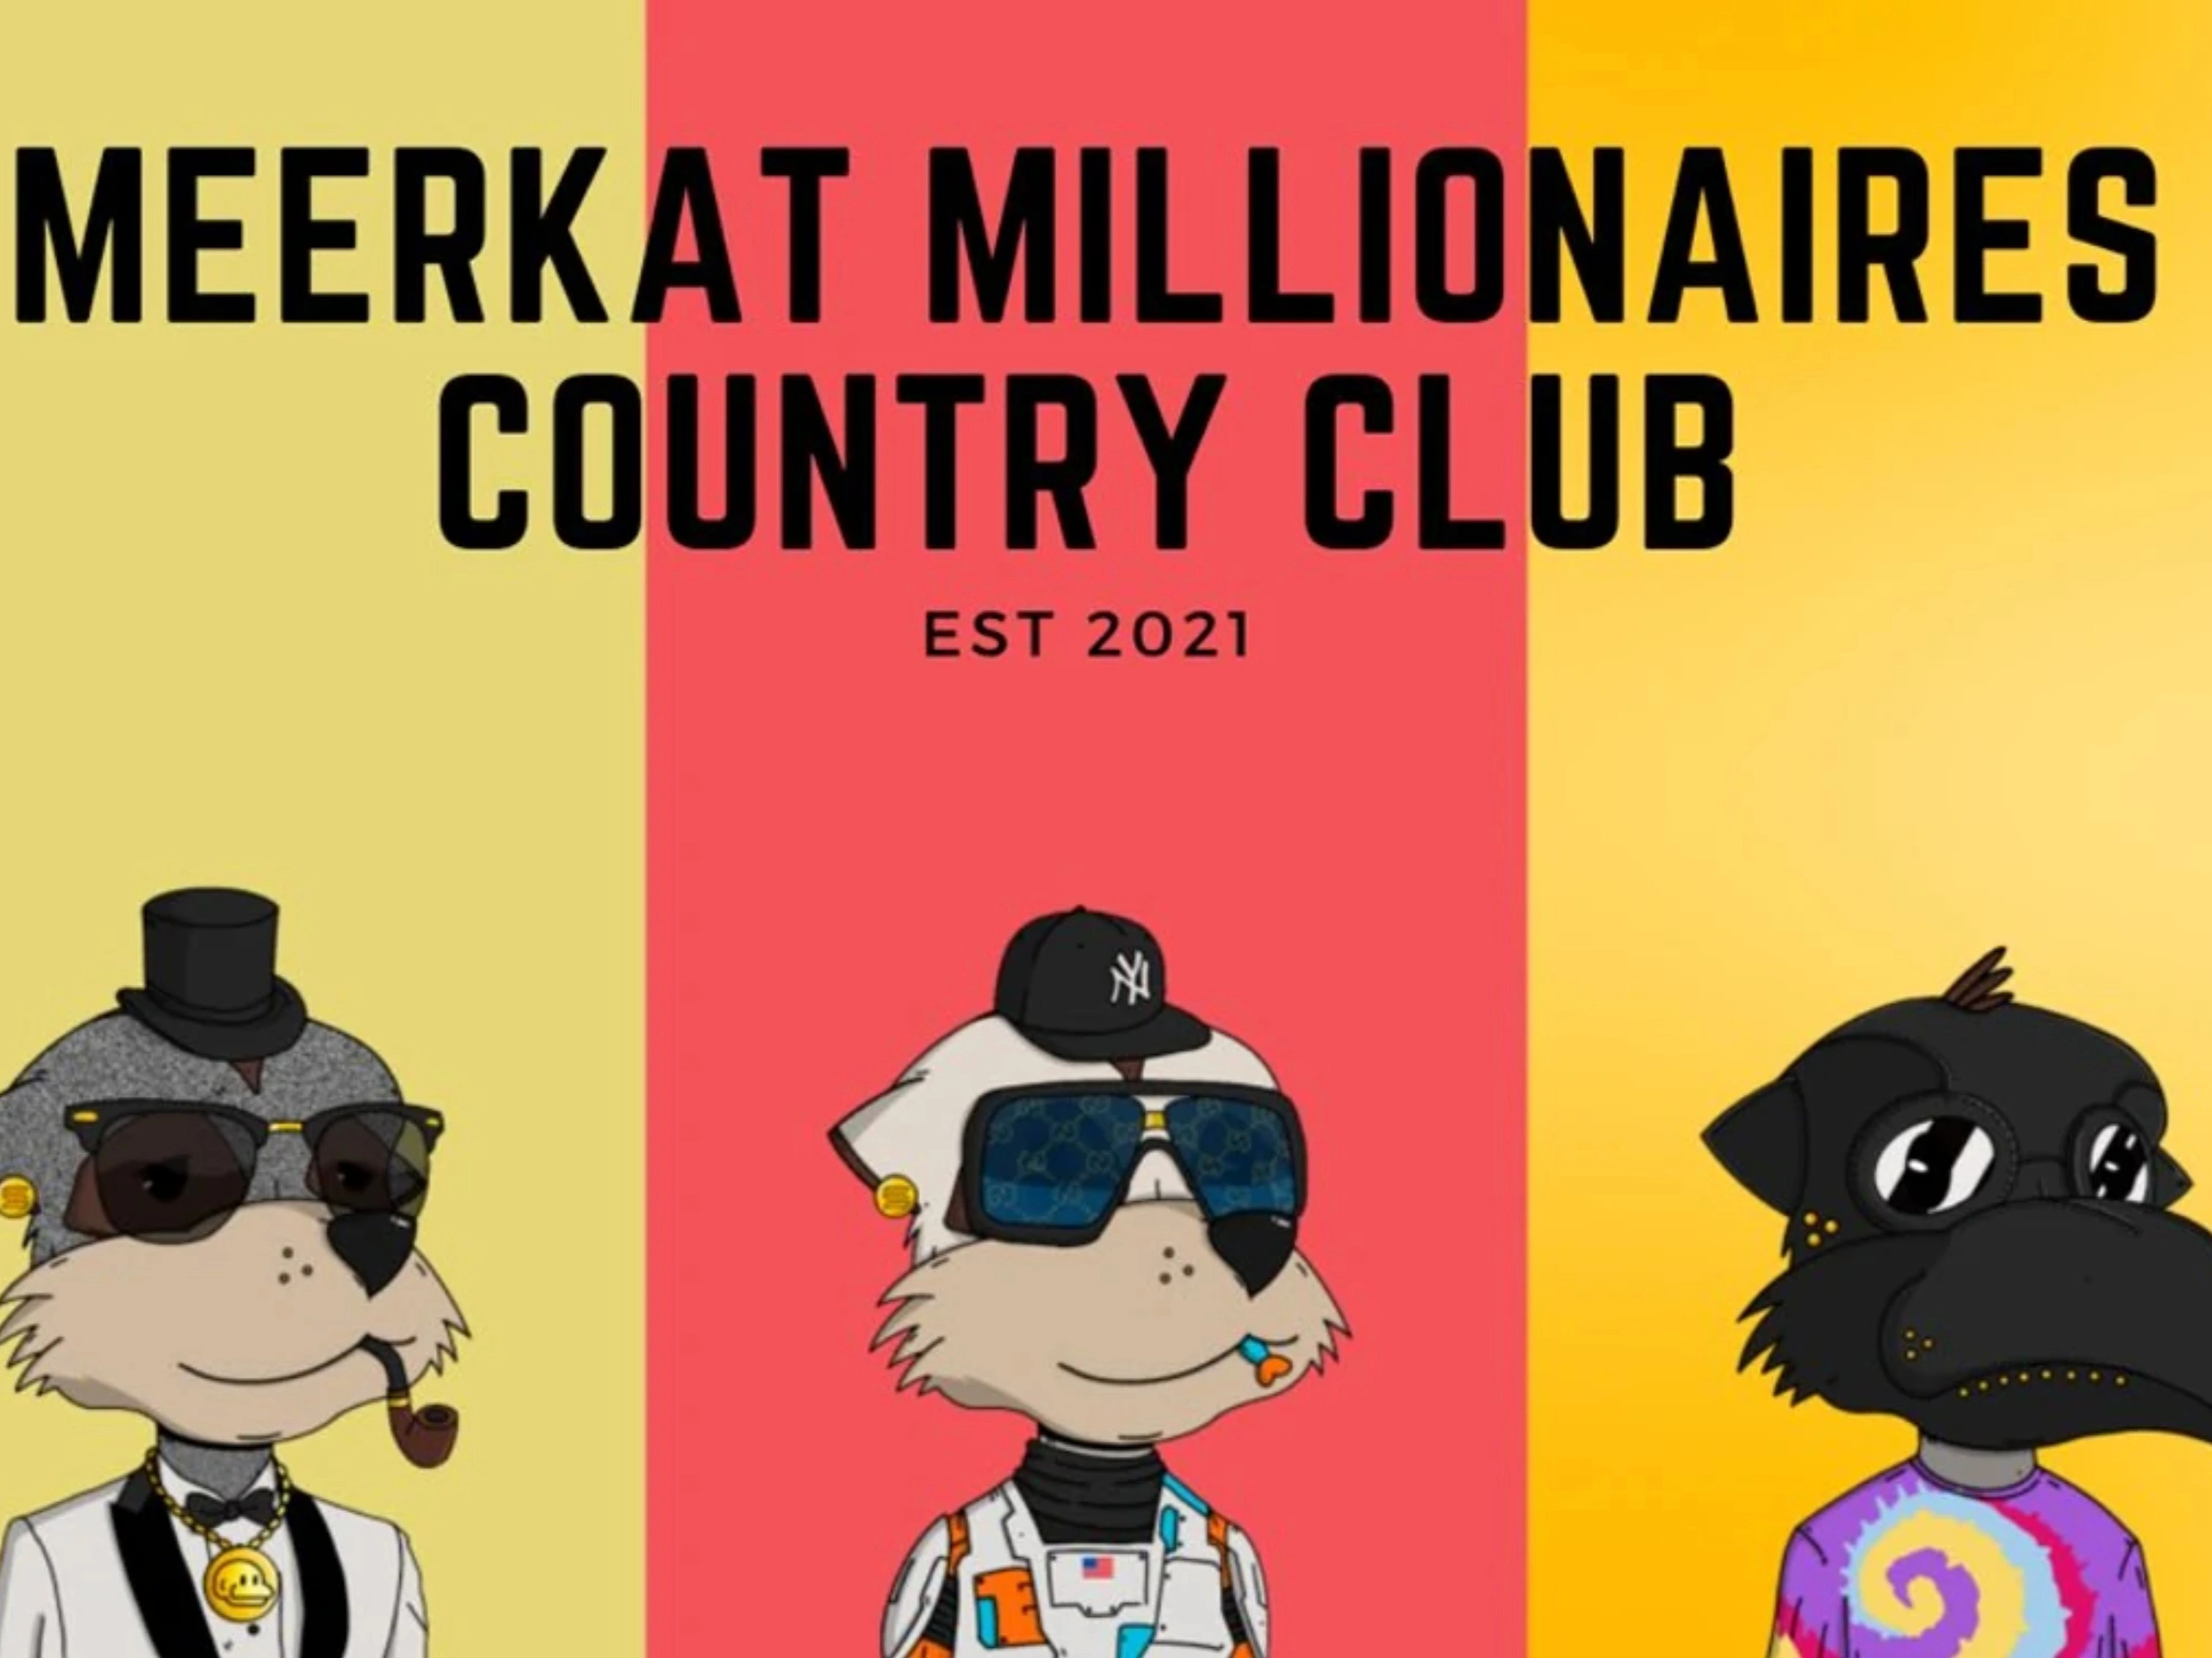 Meerkat Millionaires Country Club